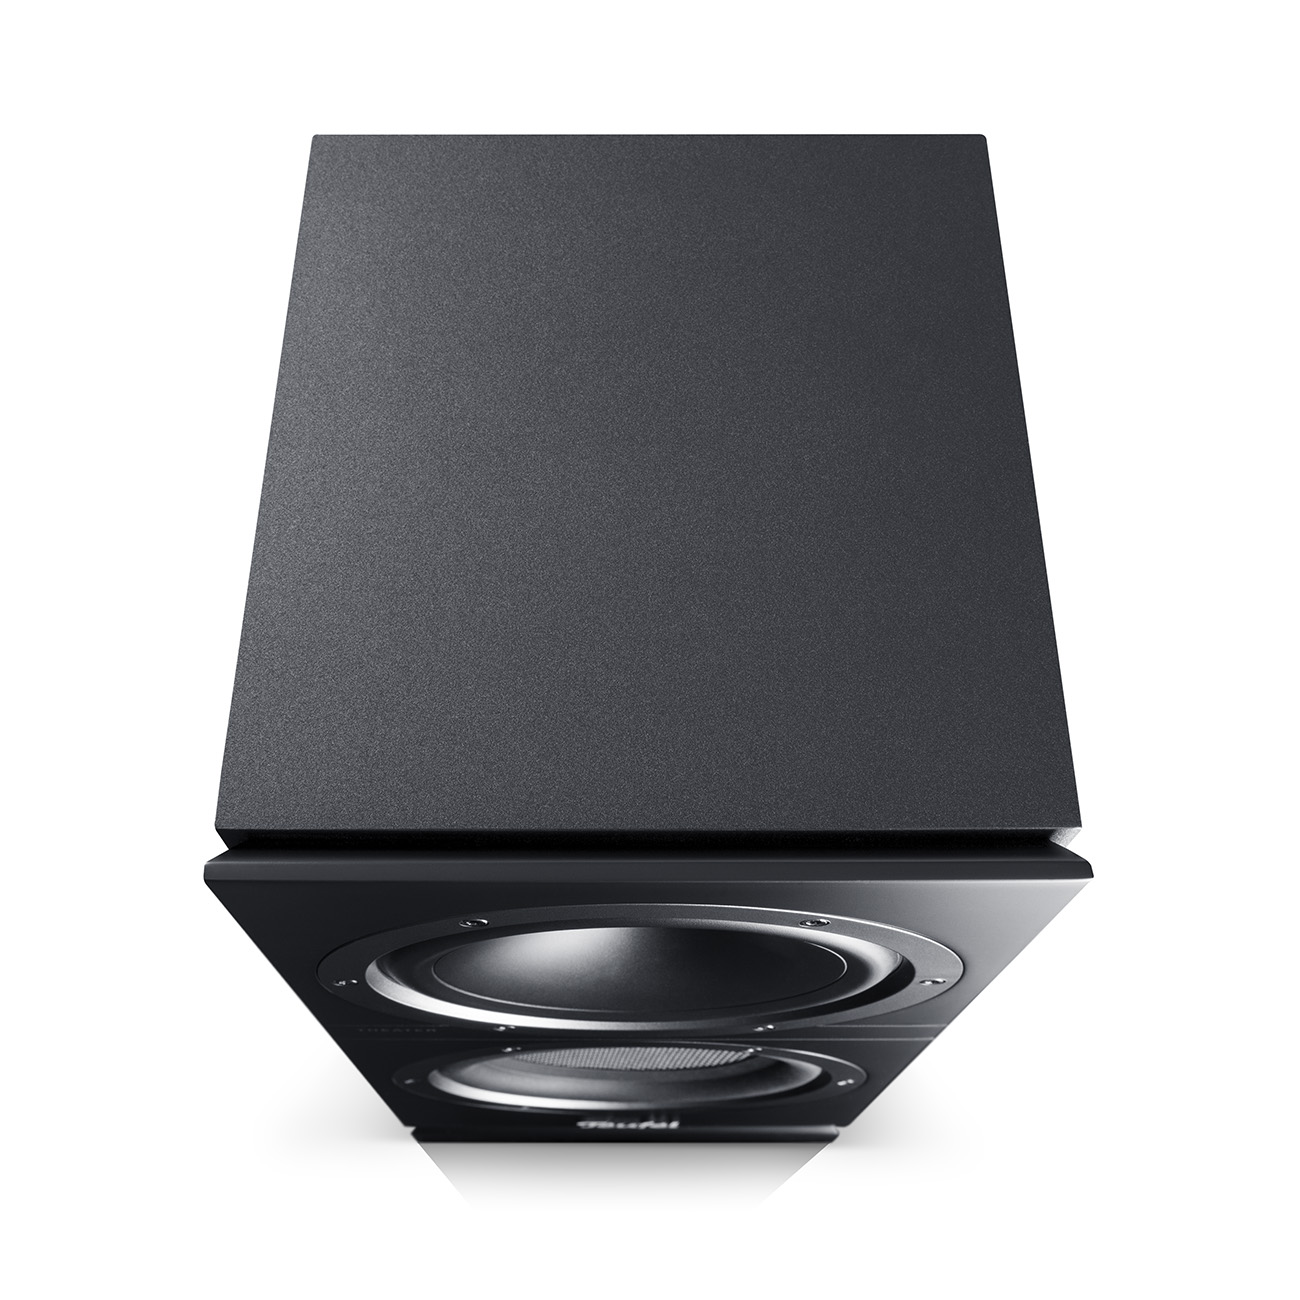 TEUFEL THEATER 500S Stereo-Regallautsprecher Schwarz Passiv-Lautsprecher